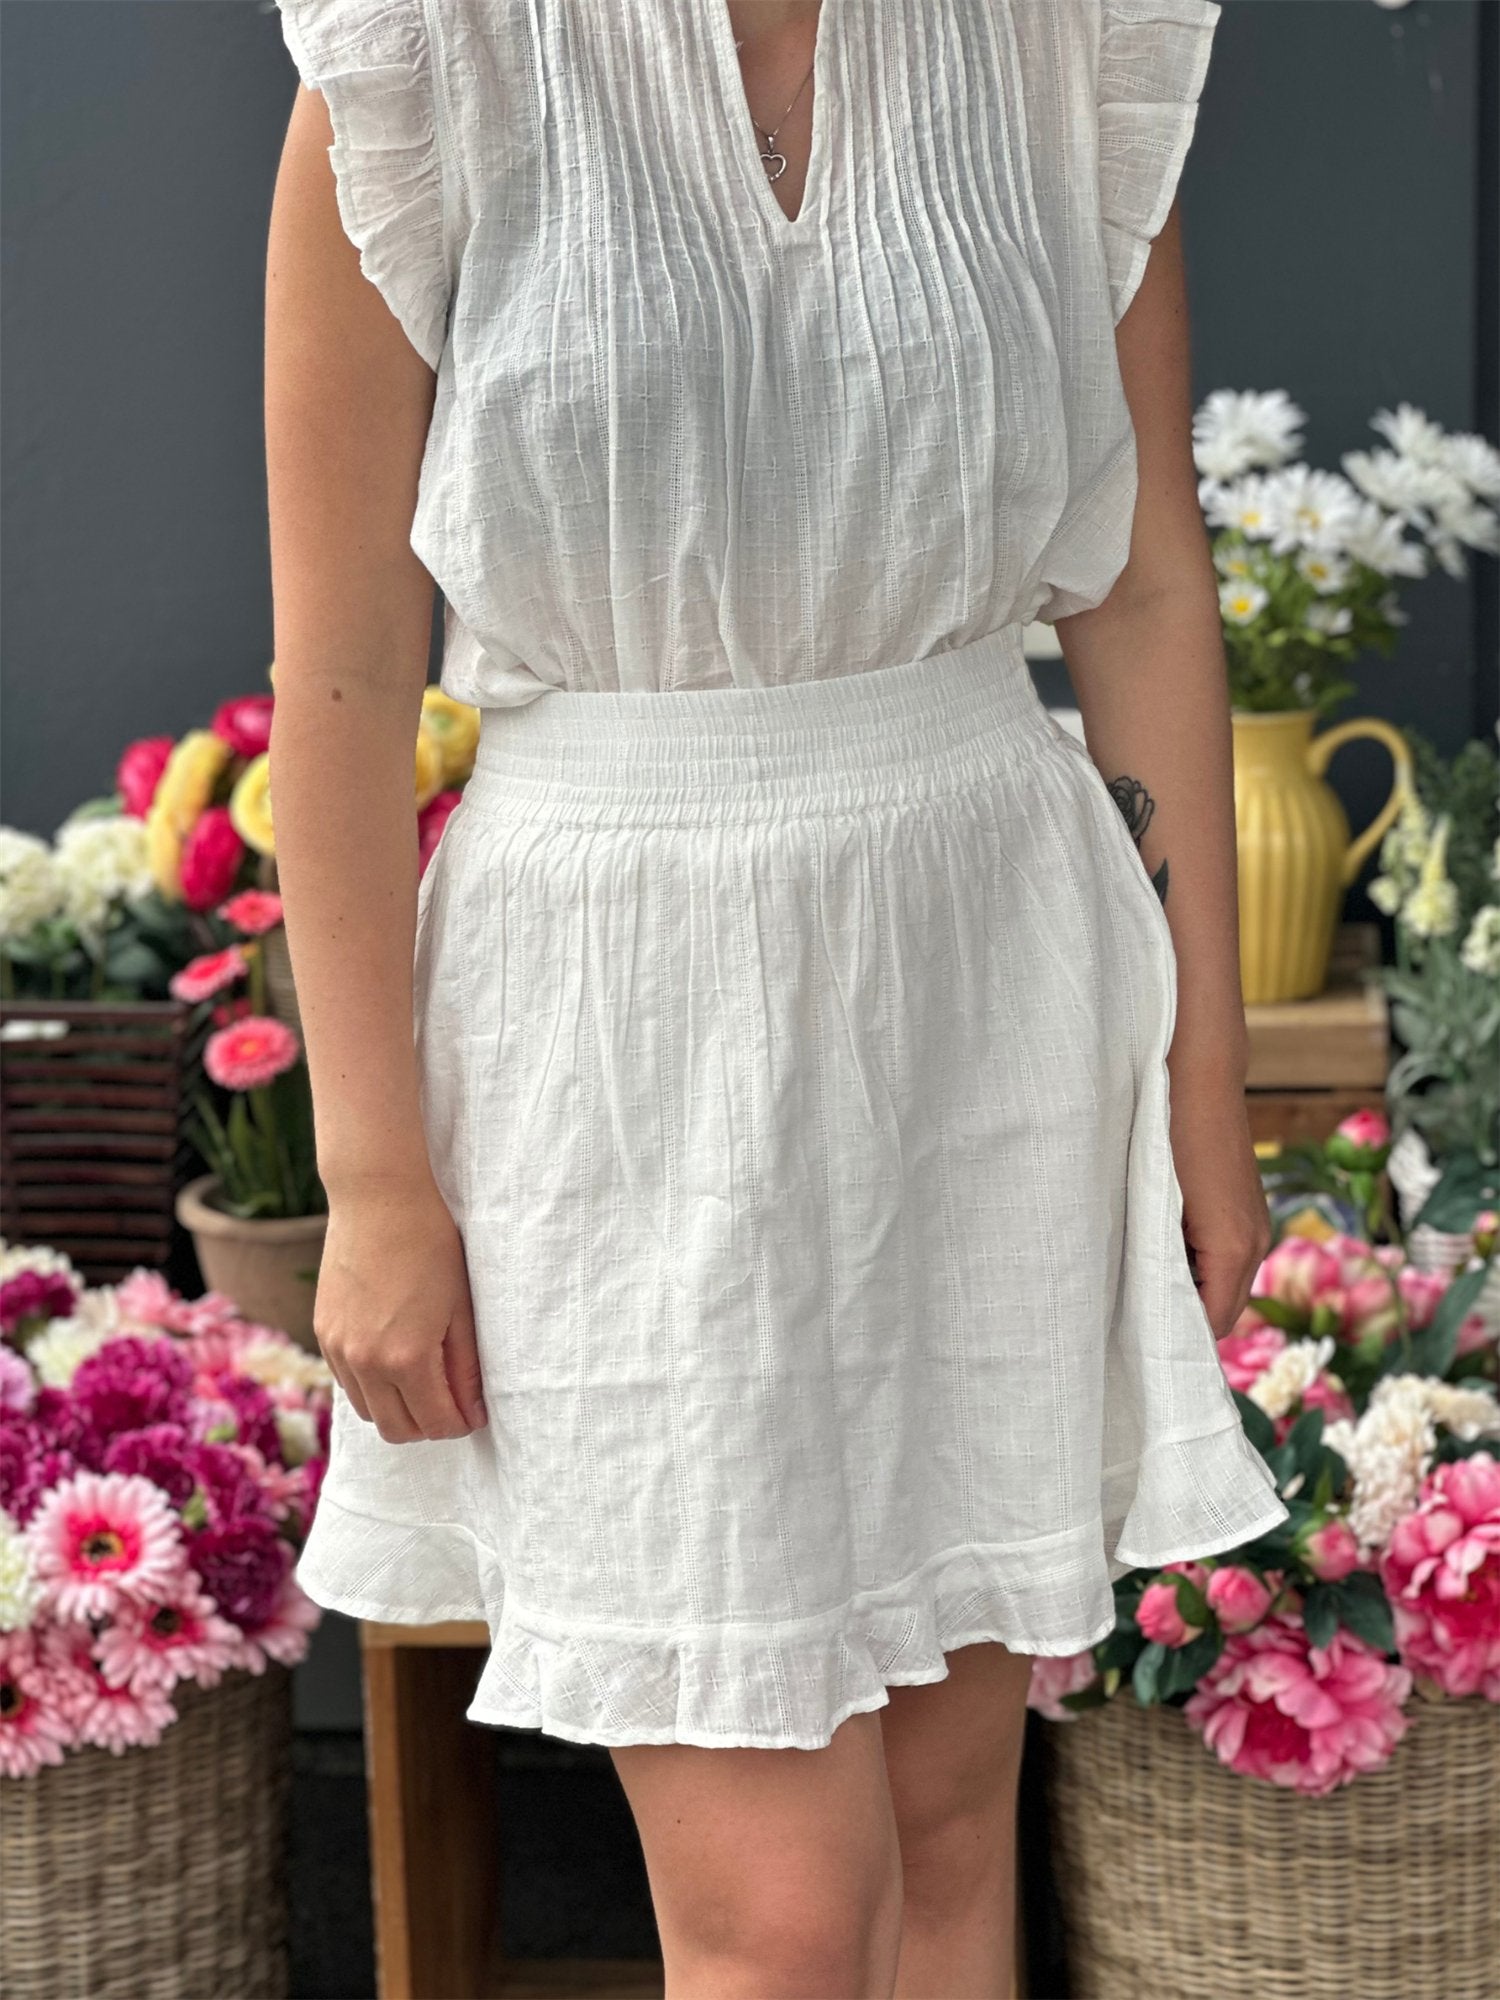 Coe-M Skirt - White - at home